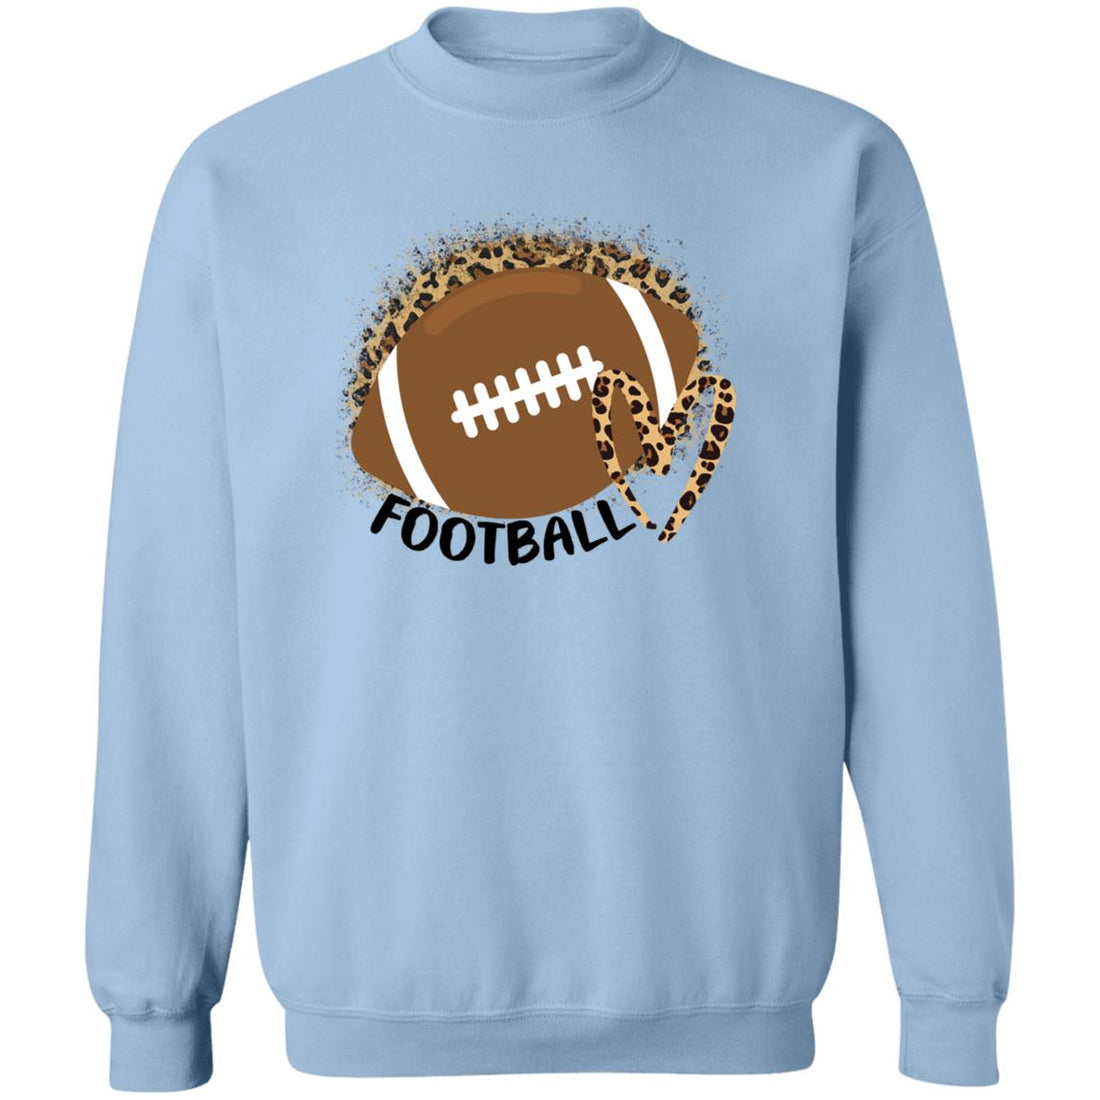 Football Leopard Love Crewneck Pullover Sweatshirt - Sweatshirts - Positively Sassy - Football Leopard Love Crewneck Pullover Sweatshirt